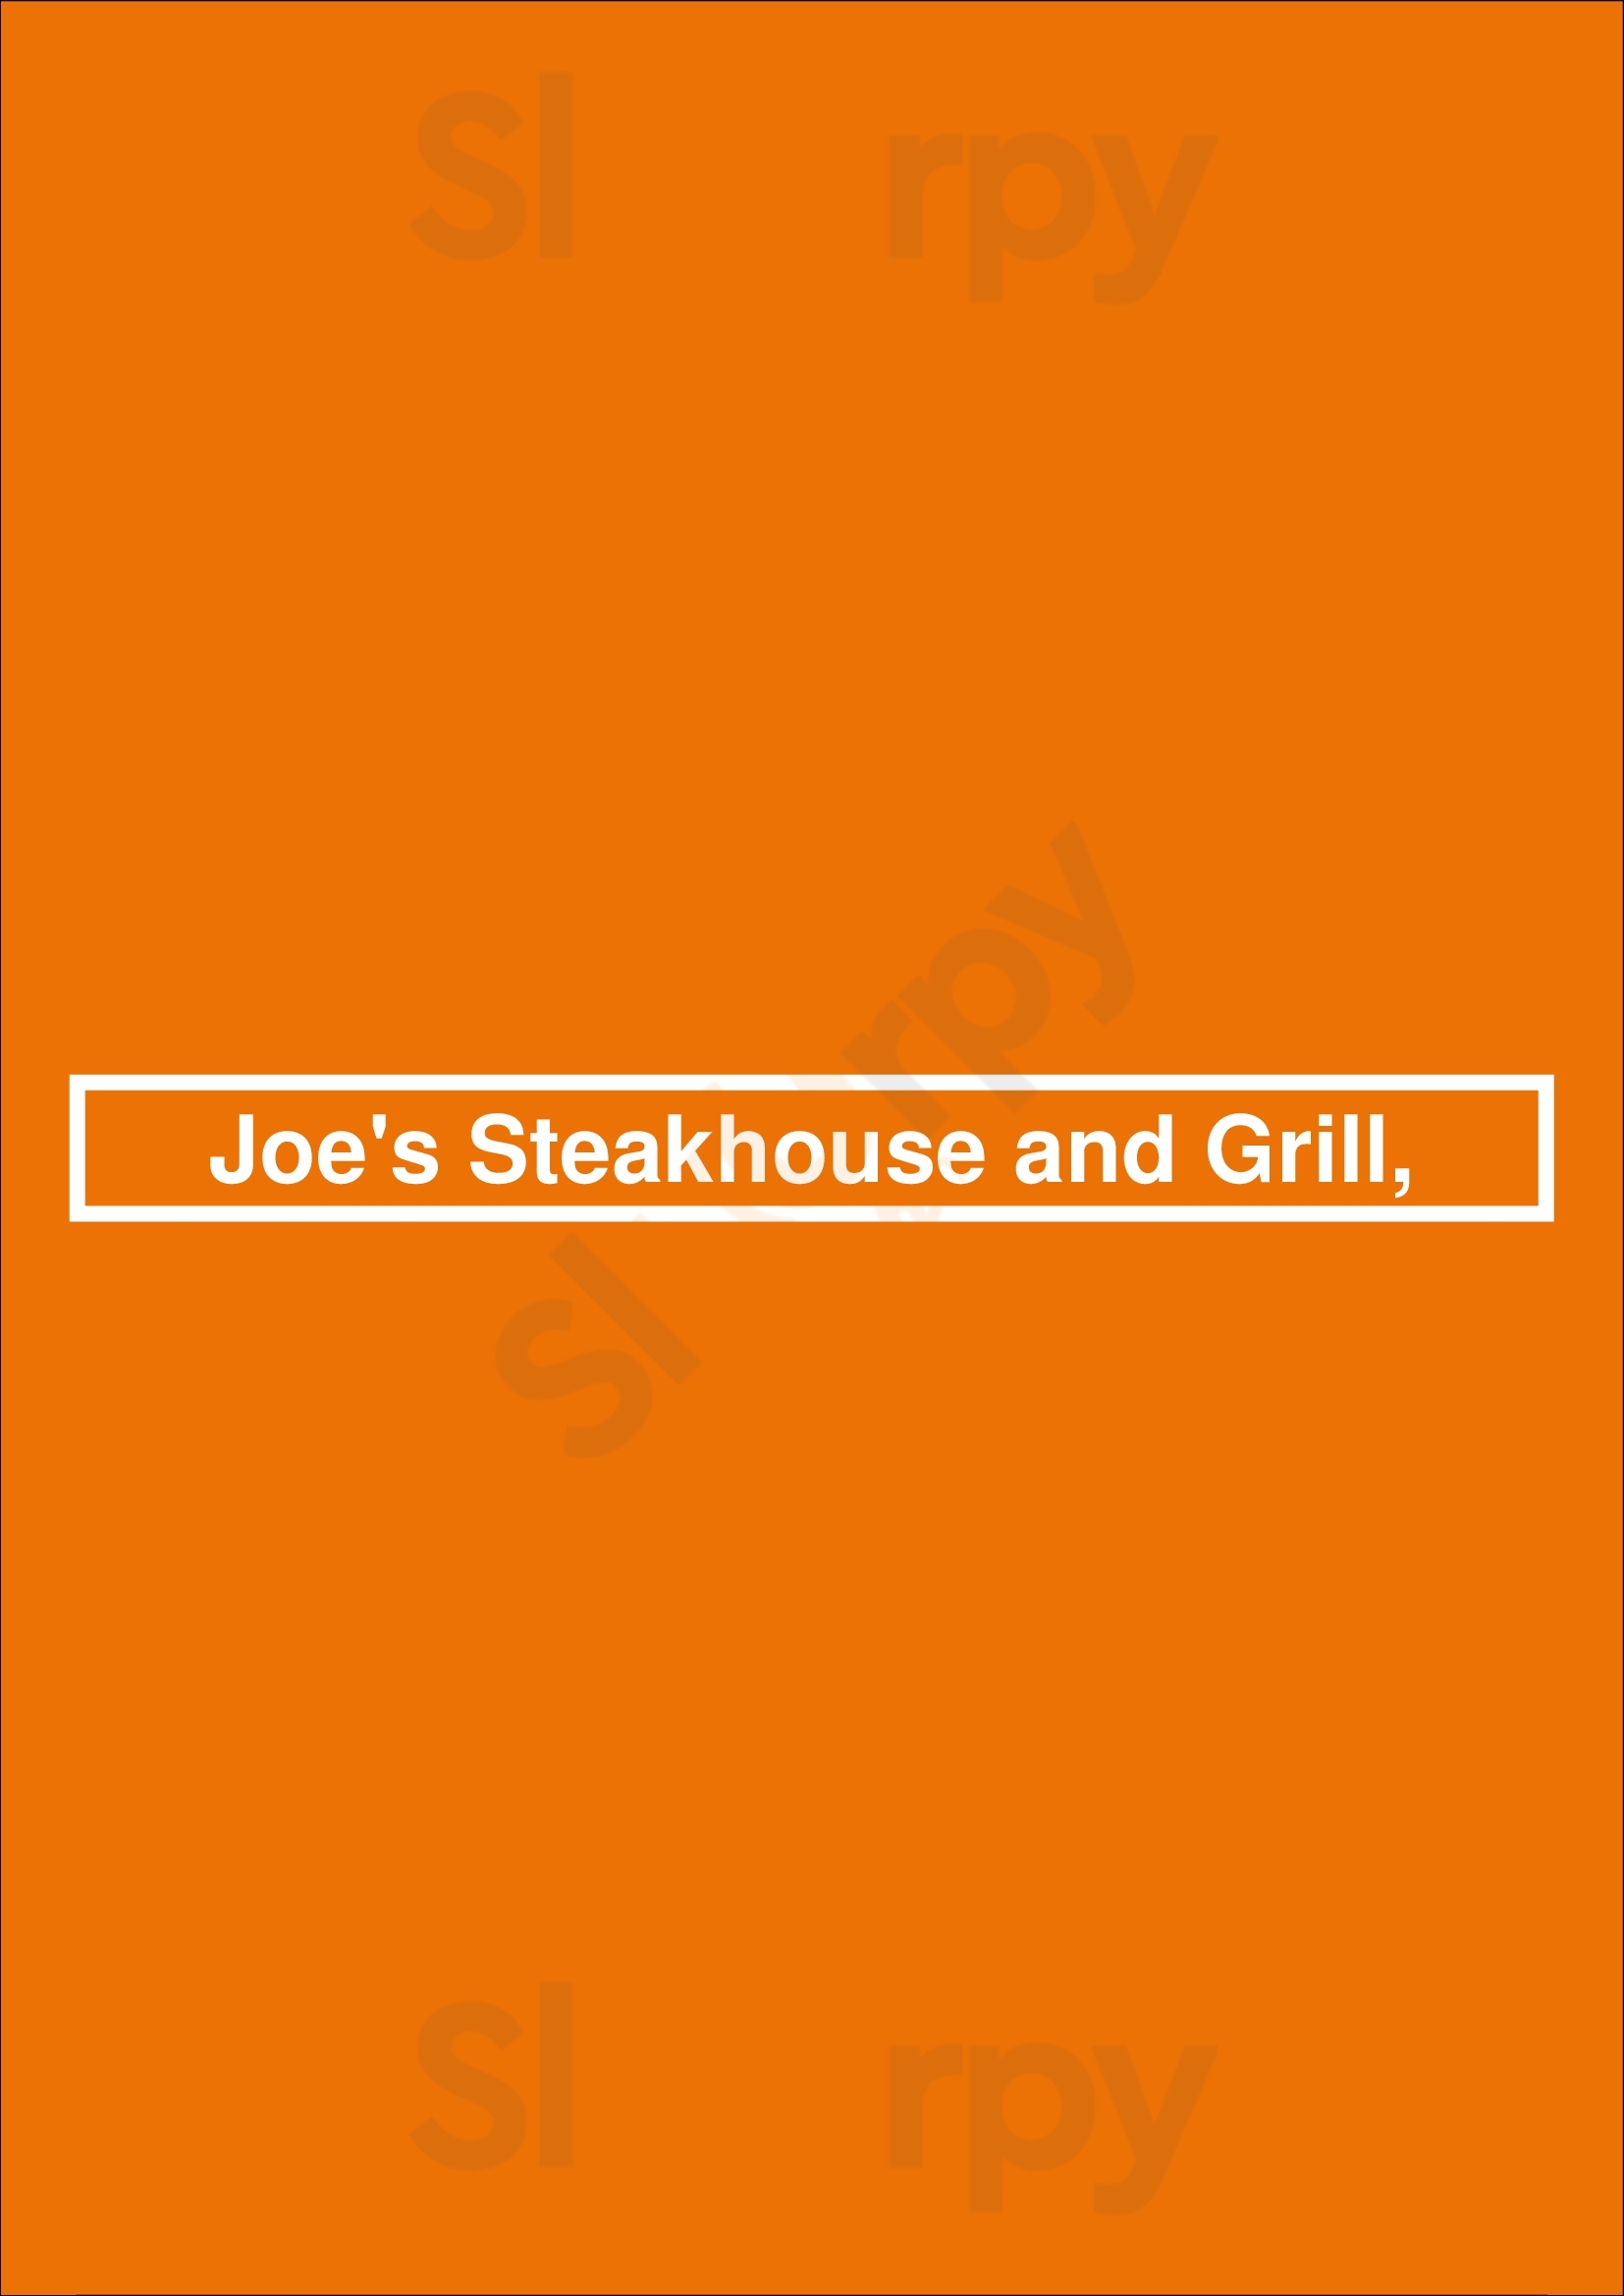 Joe's Steakhouse And Grill, Fresno Menu - 1